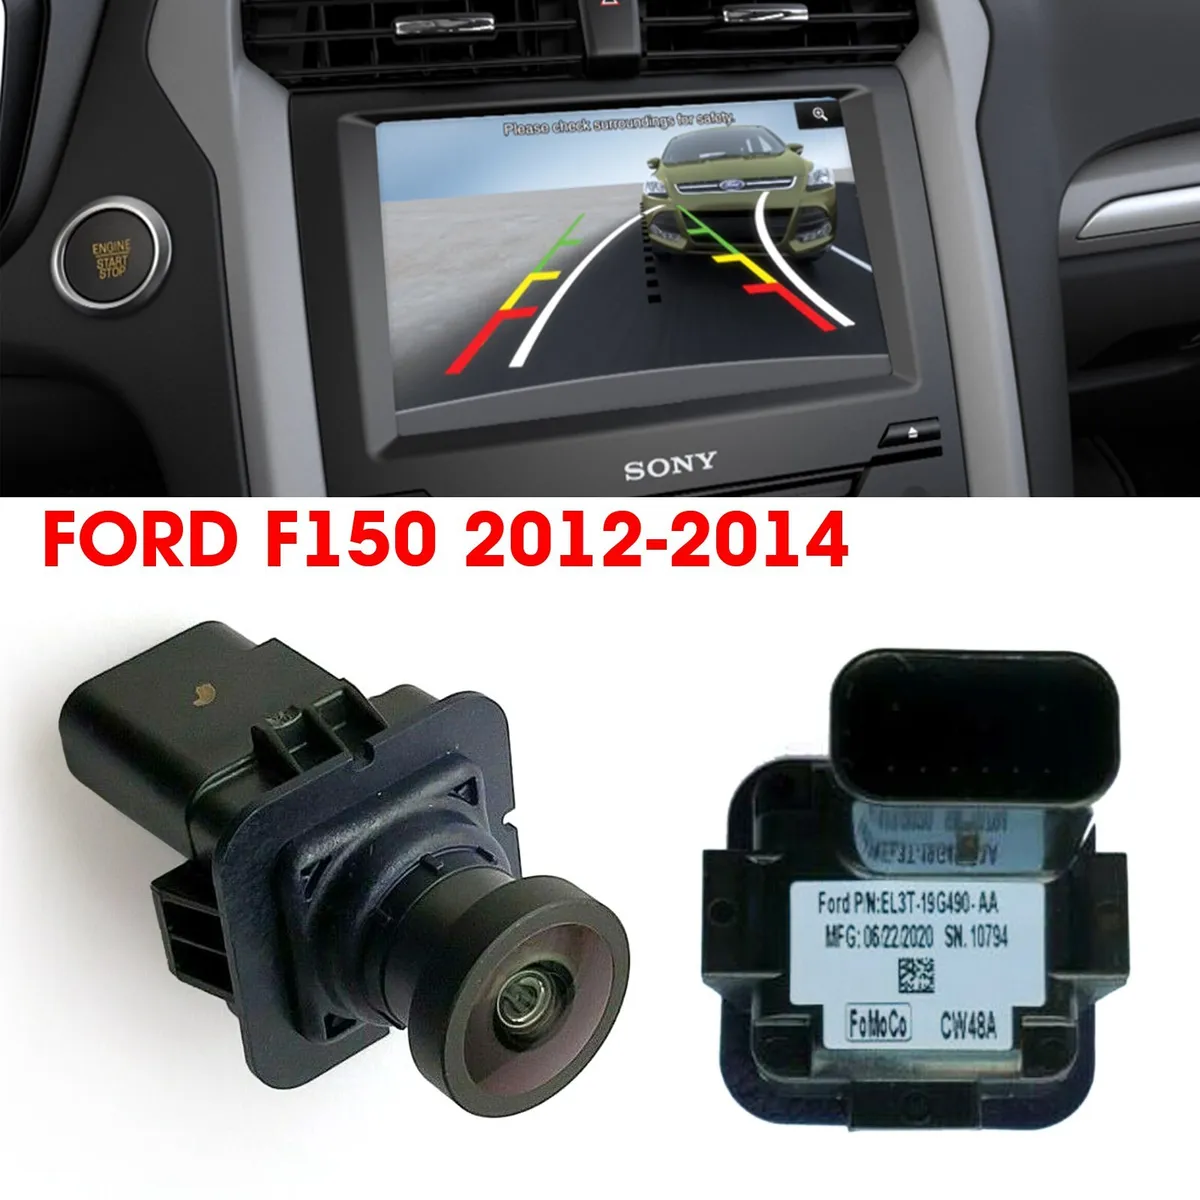 2014 ford f150 backup camera